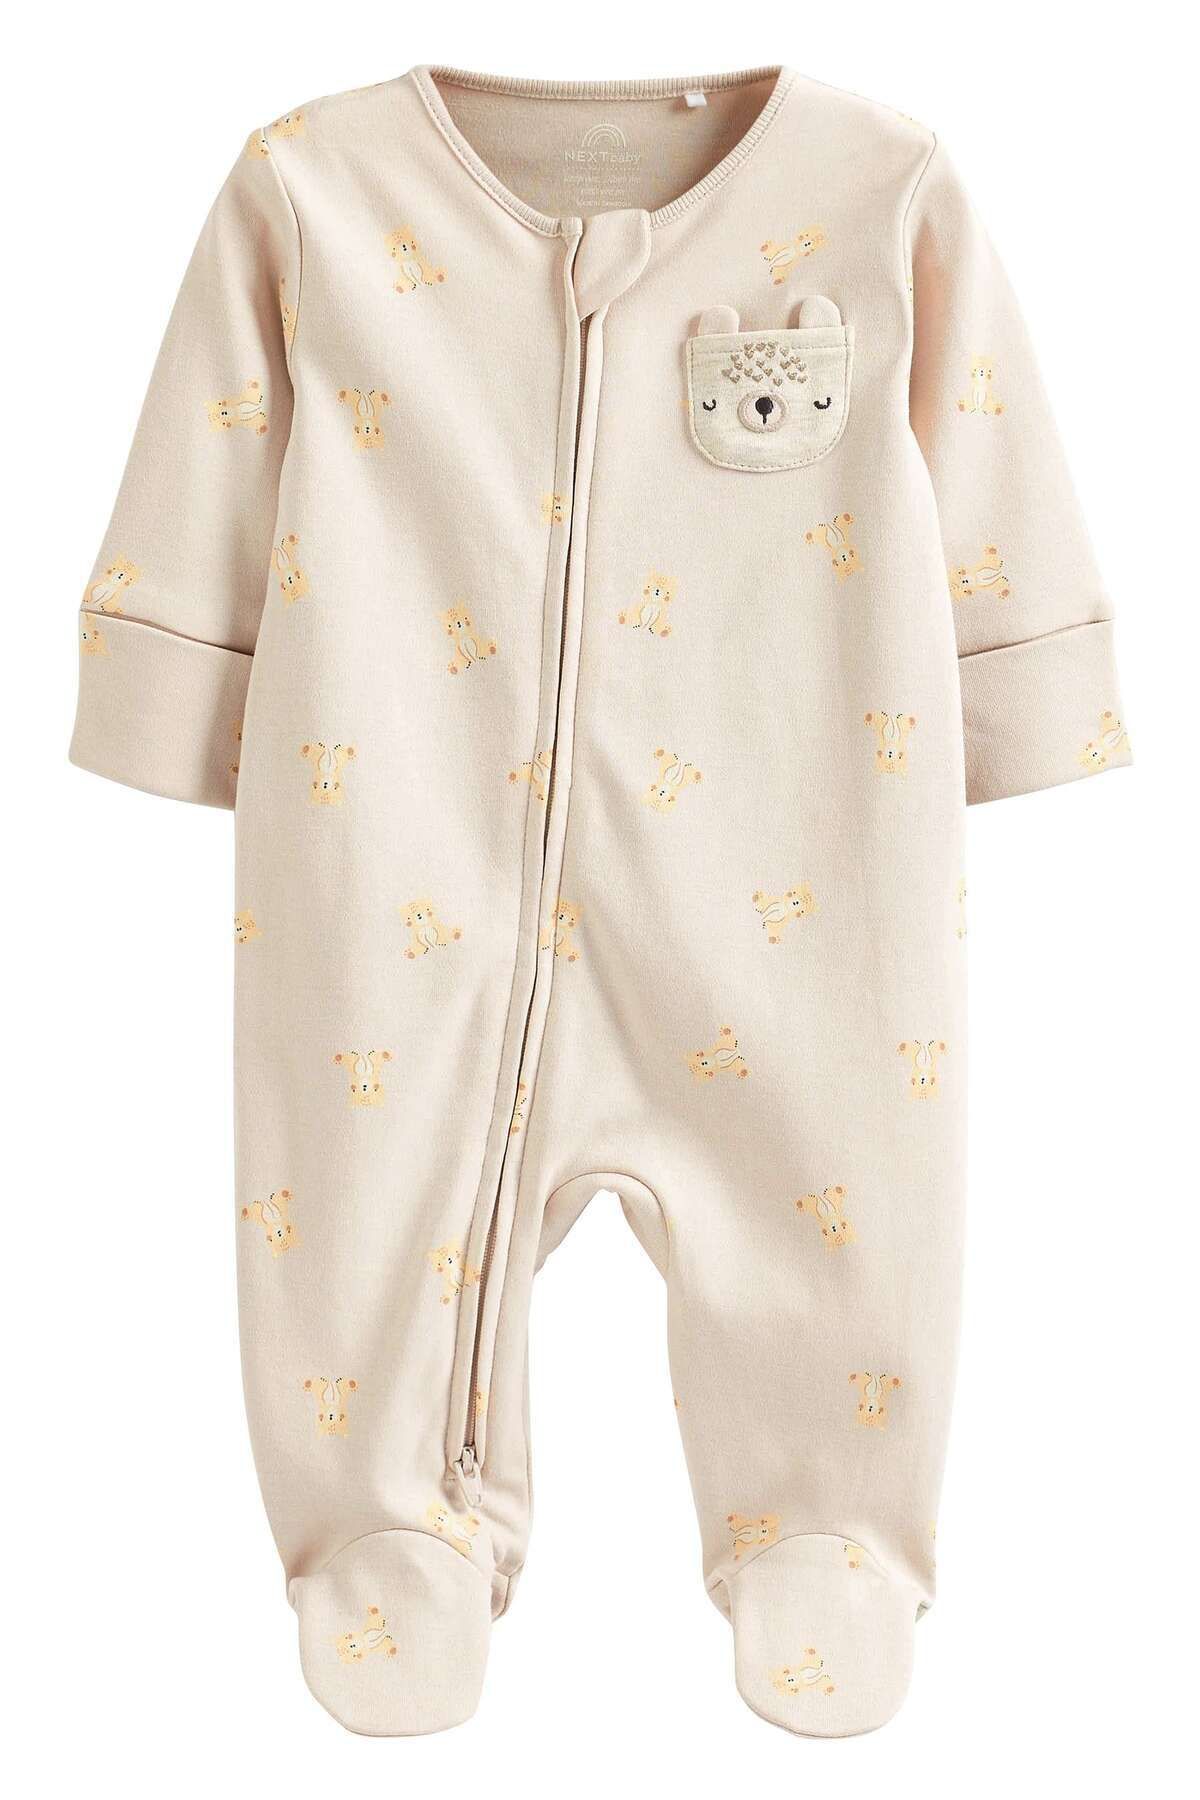 Next Baby ست 3 لباس 100% پنبه ای با طرح خرس بادکنکی